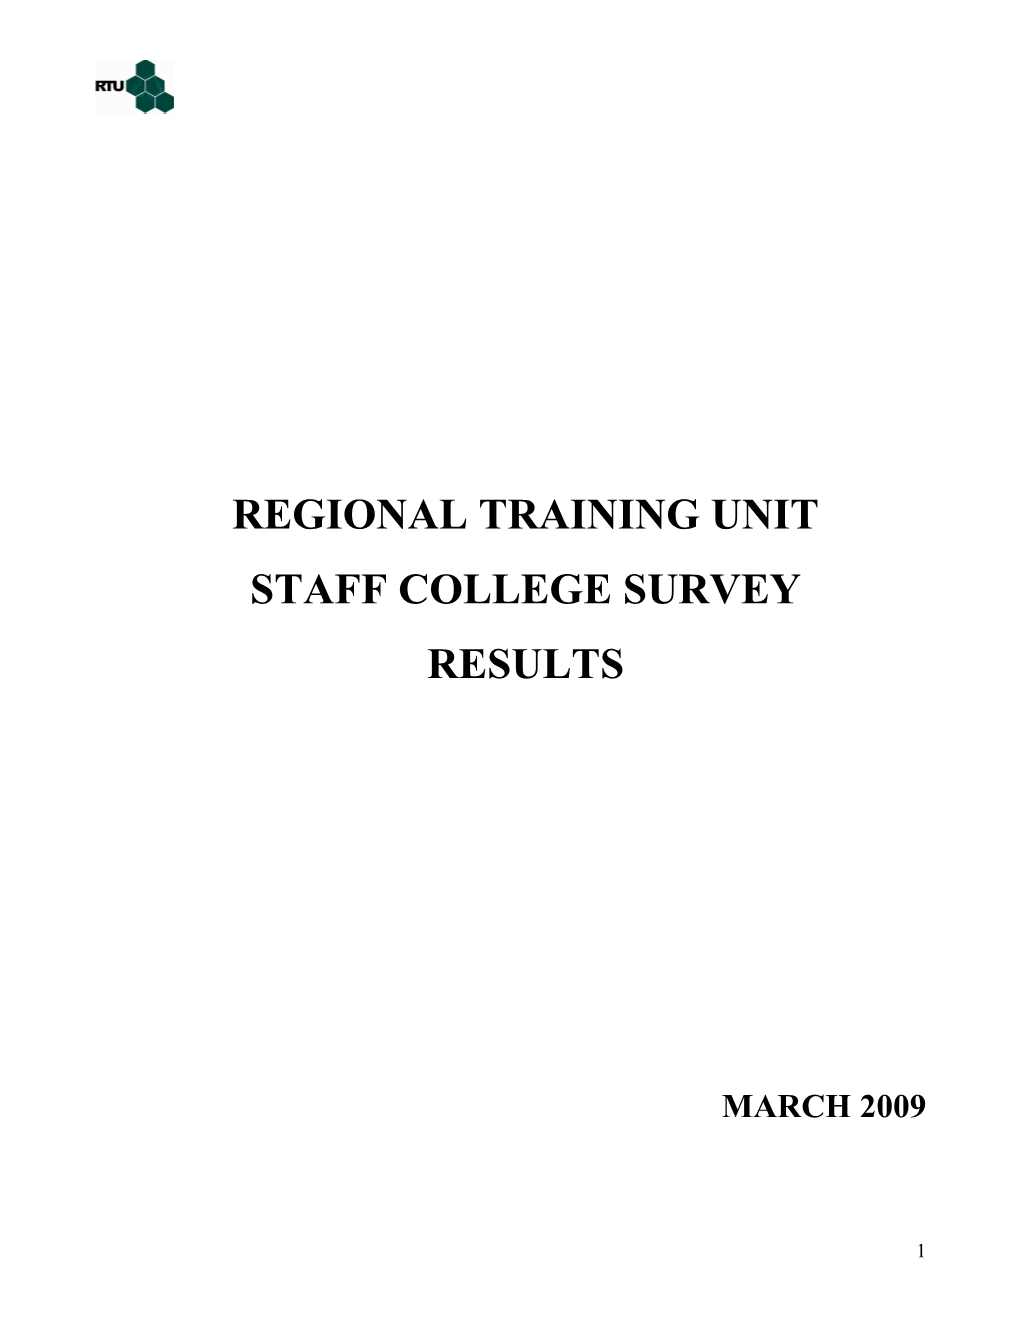 Regional Training Unit